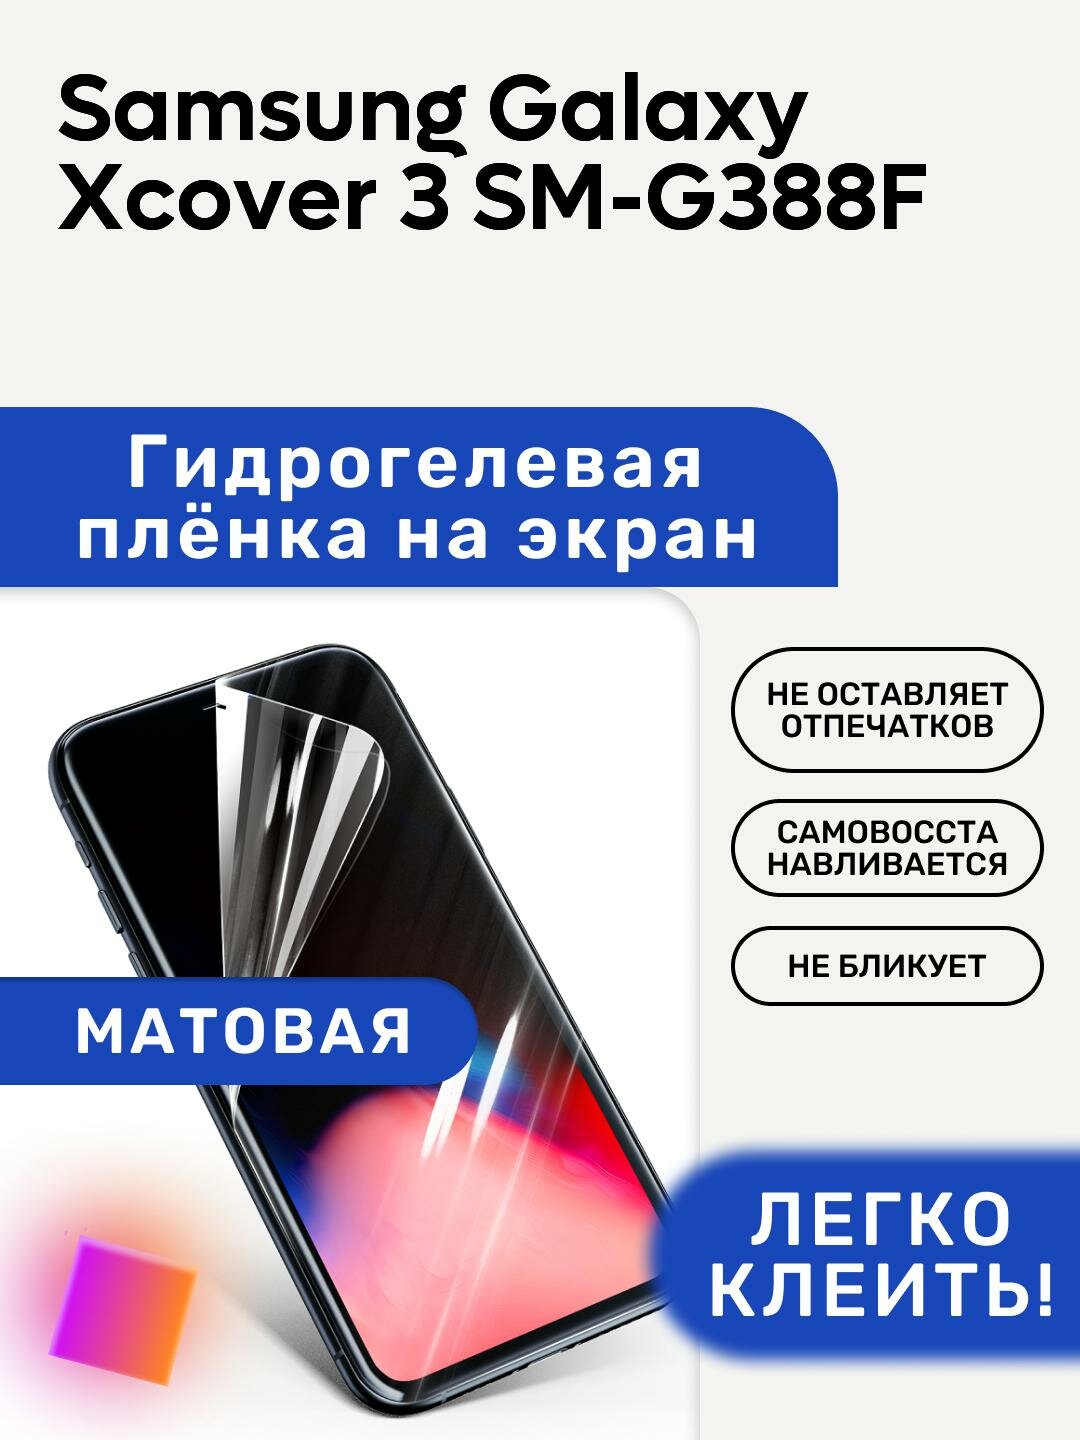 Матовая Гидрогелевая плёнка, полиуретановая, защита экрана Samsung Galaxy Xcover 3 SM-G388F